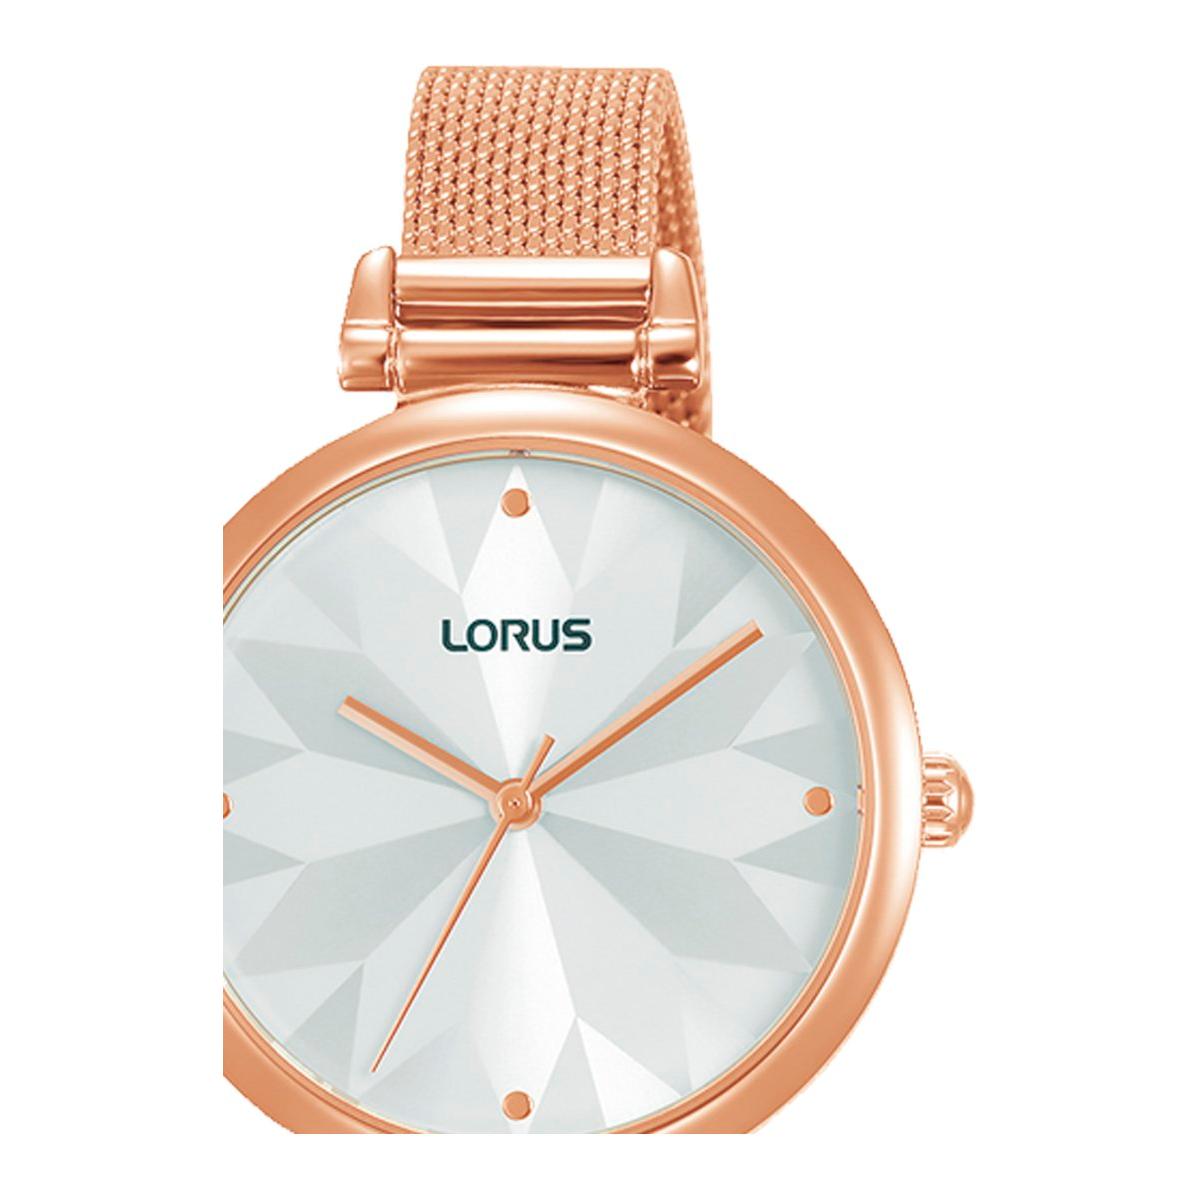 LORUS LORUS WATCHES Mod. RG204TX5 WATCHES lorus-watches-mod-rg204tx5